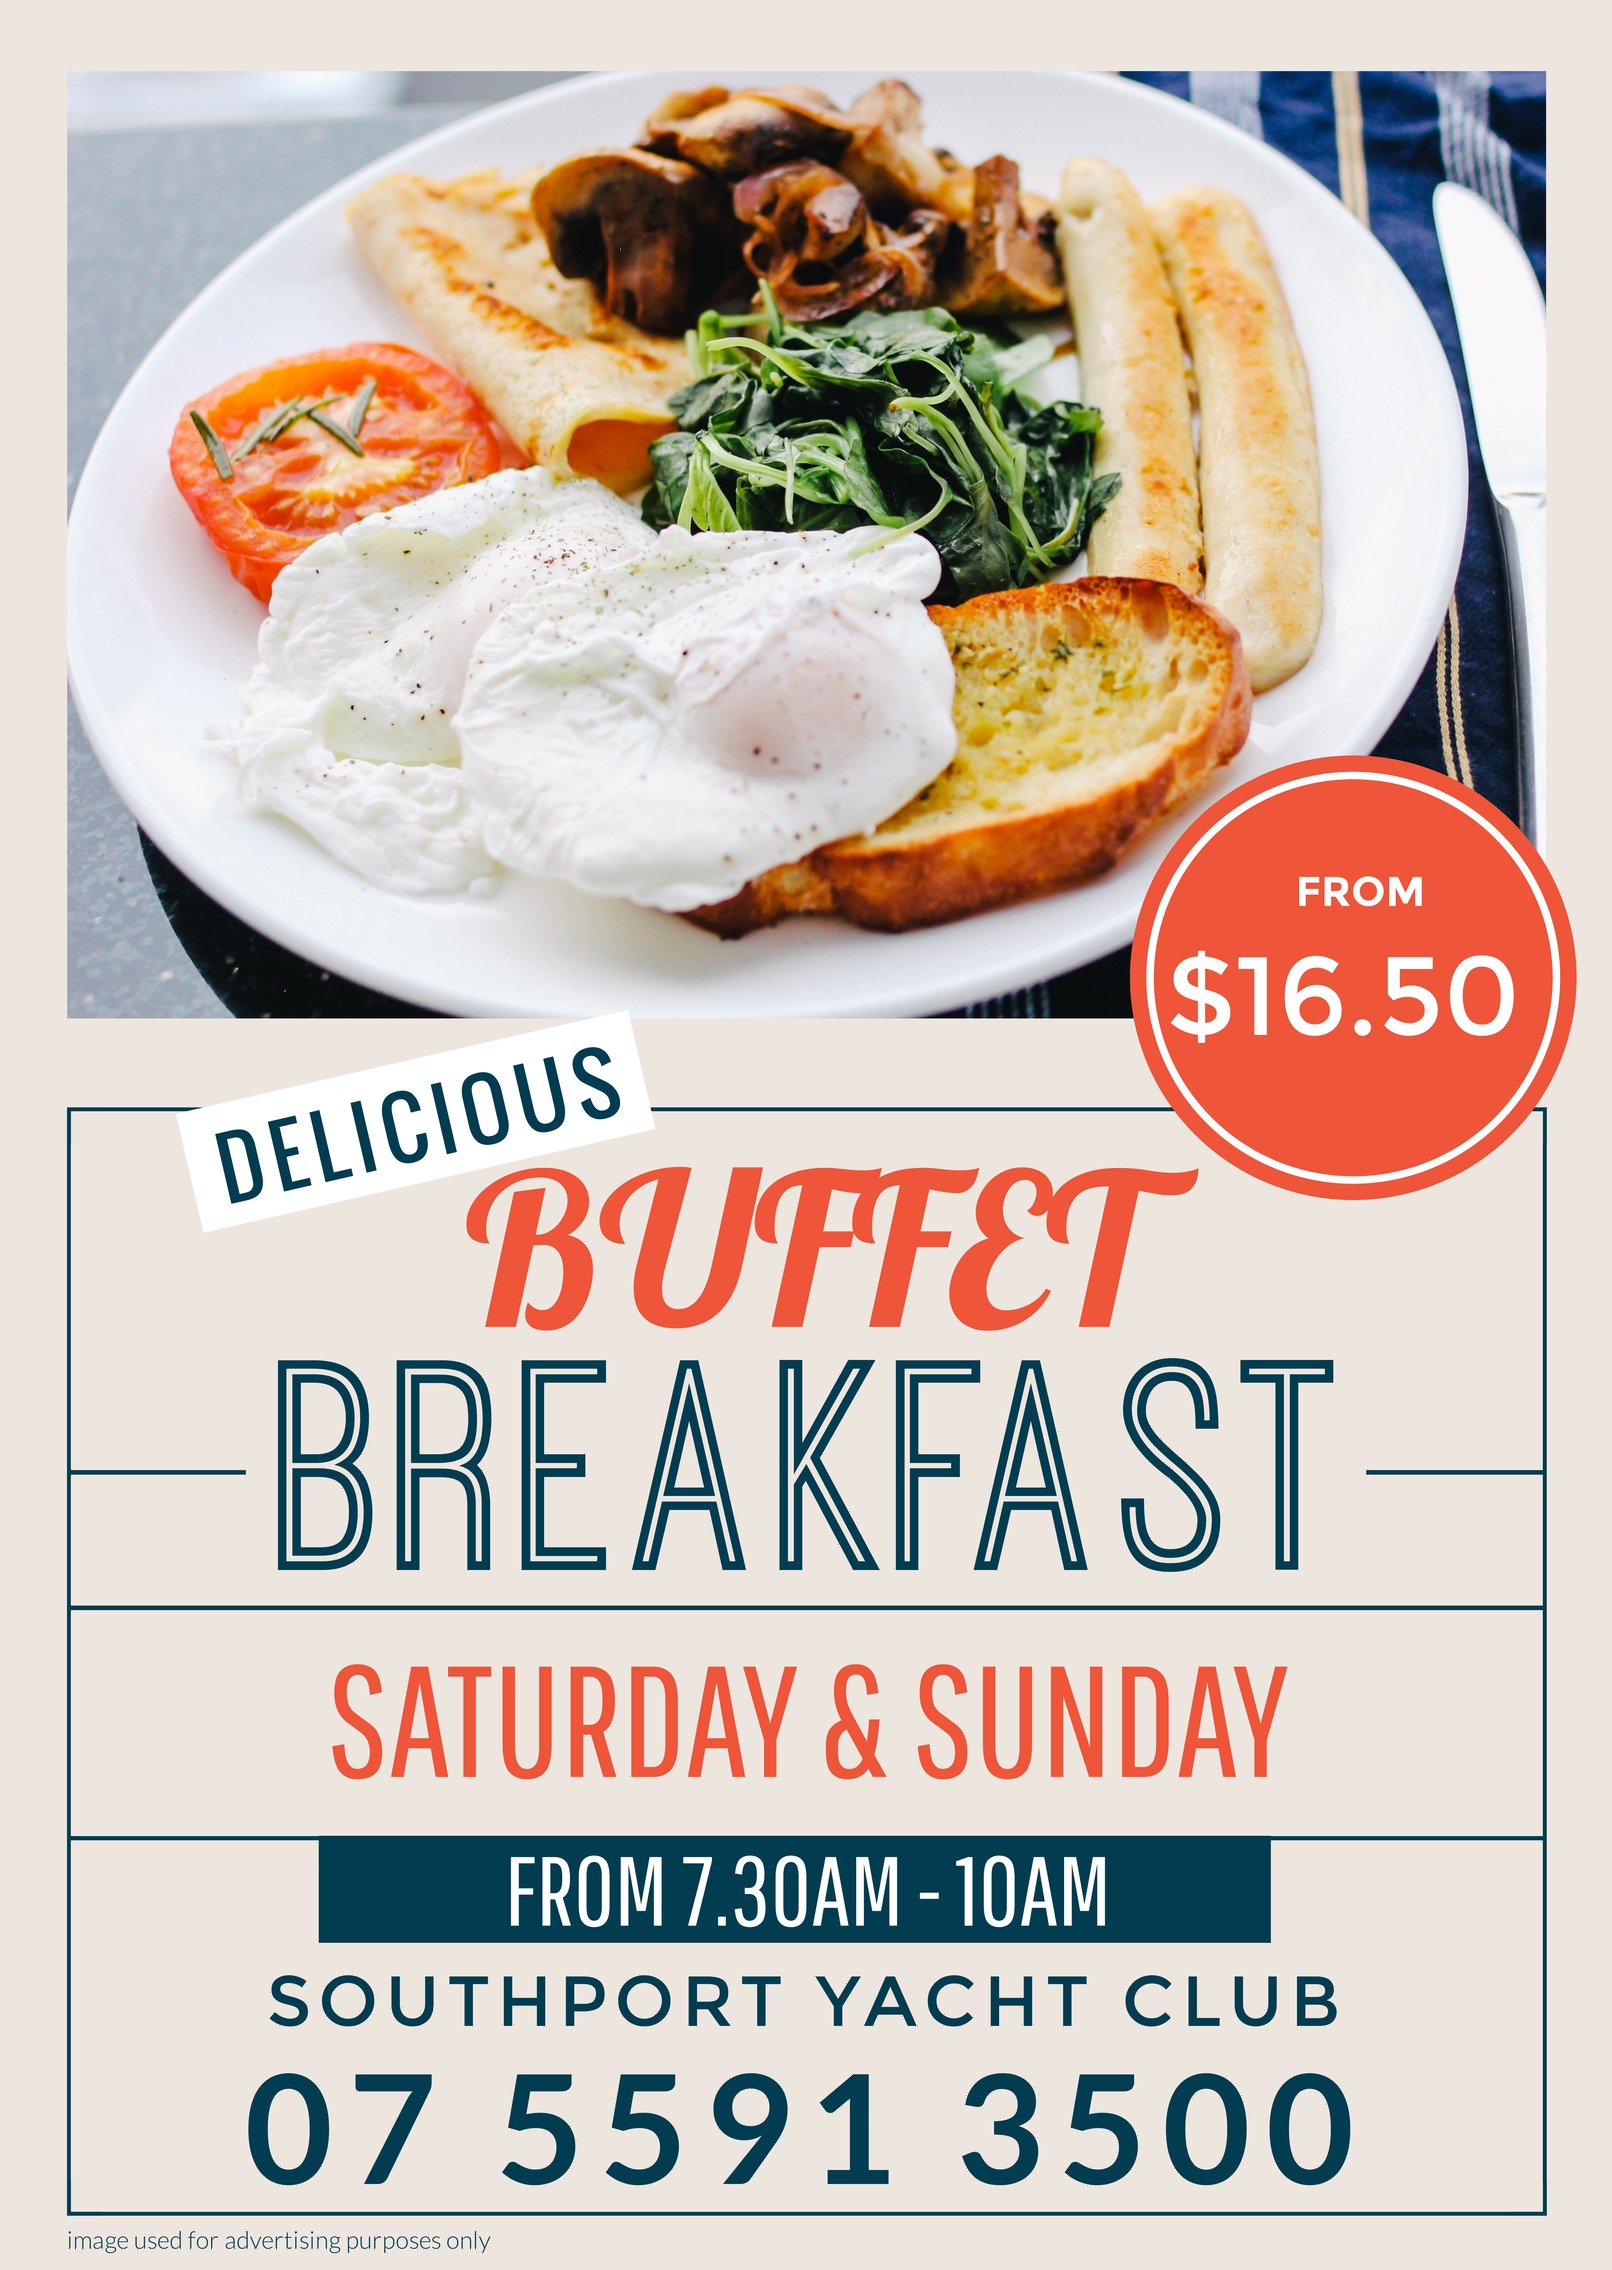 southport yacht club breakfast menu